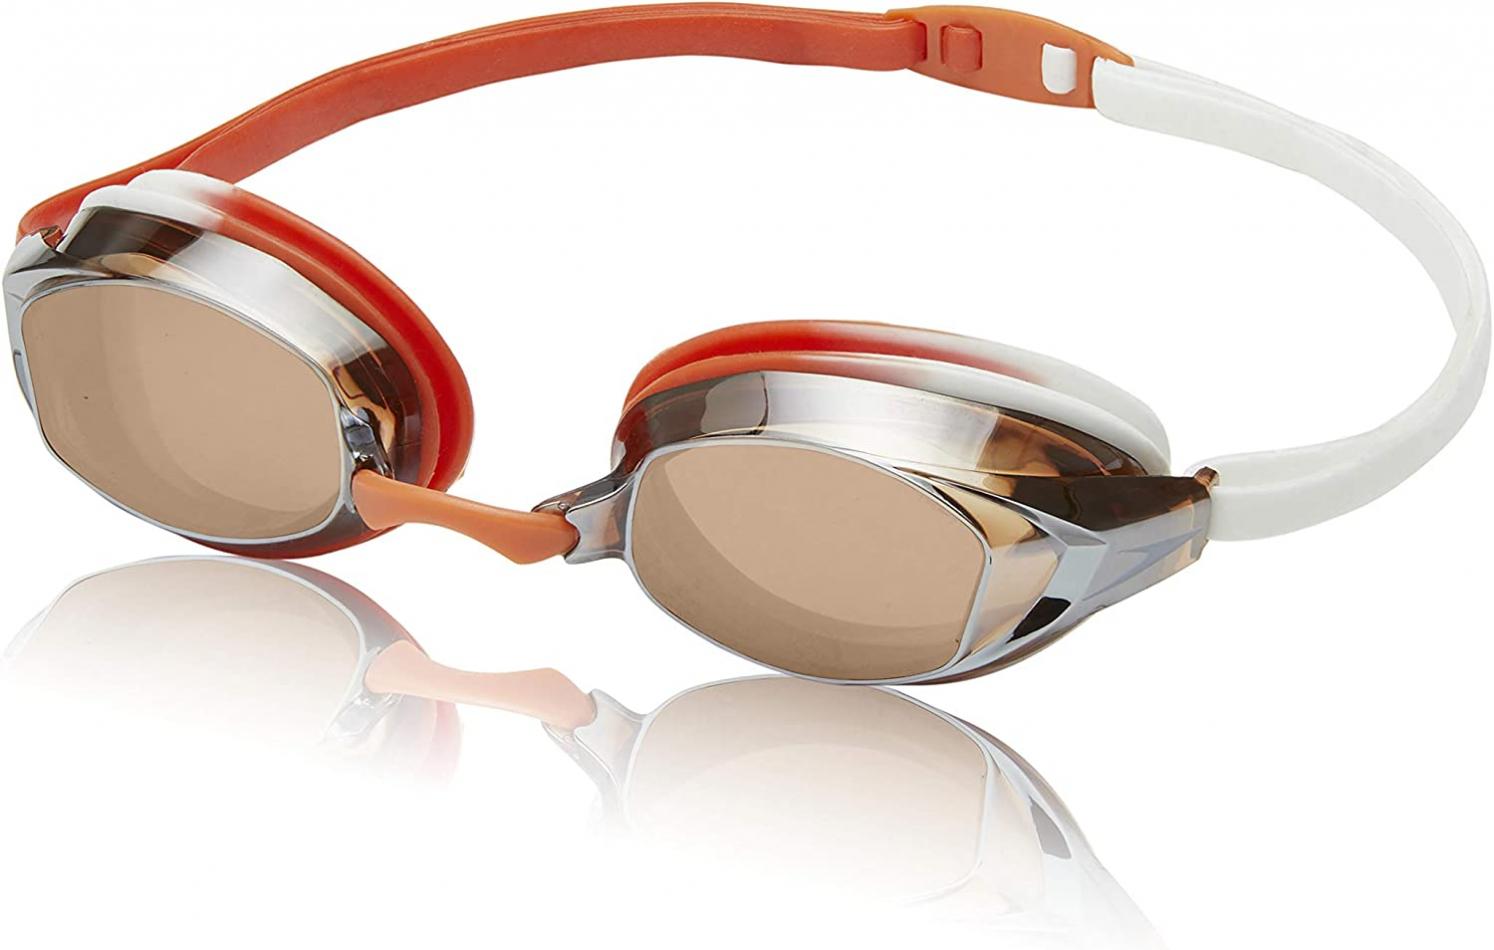 Speedo unisex adult Swim Vanquisher Extended View Goggles, Mirrored White Orange/Smoke/Grey, One Size US